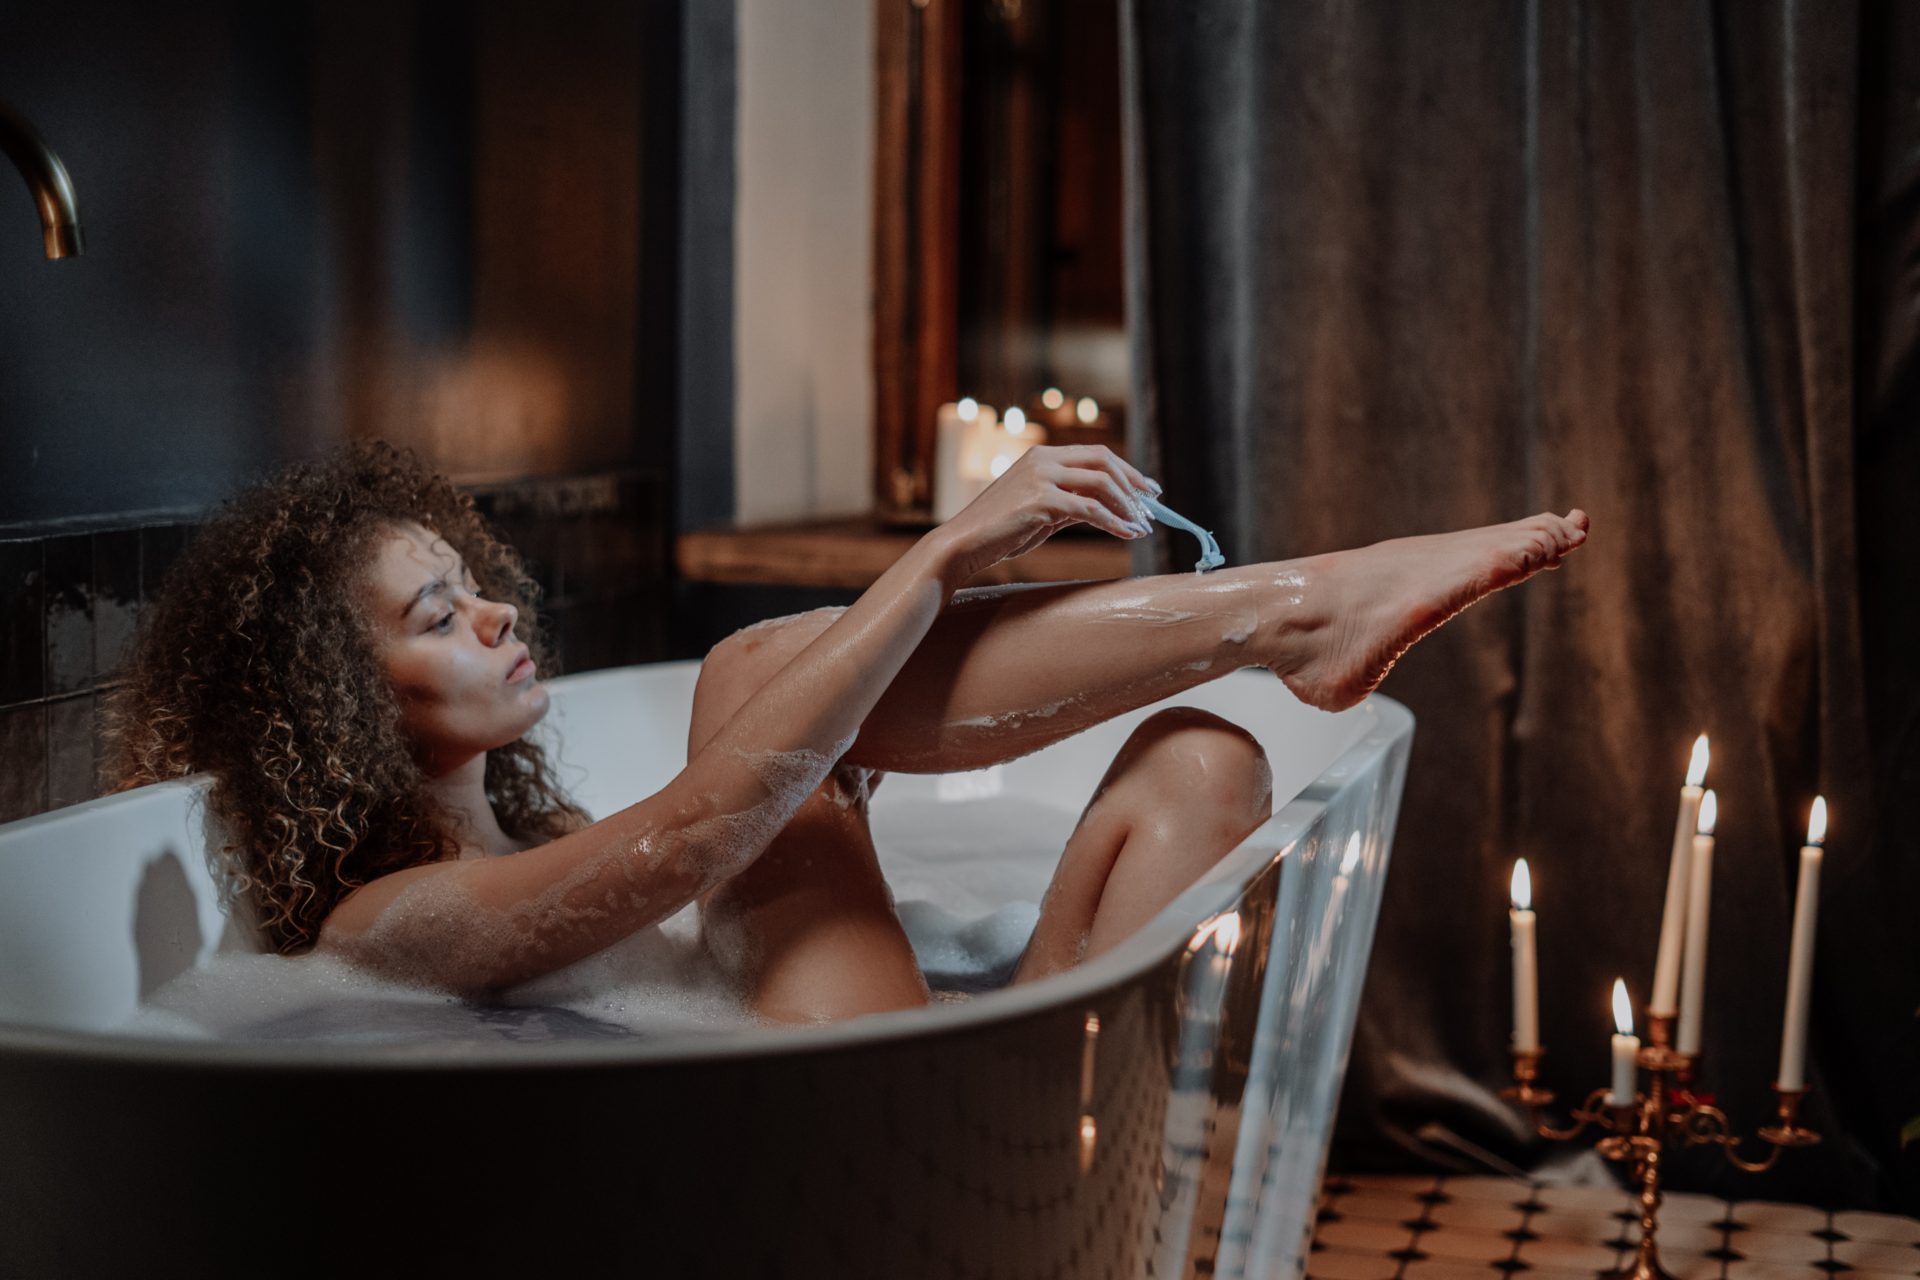 vegan razor subscription service woman shaving legs in the bath tub